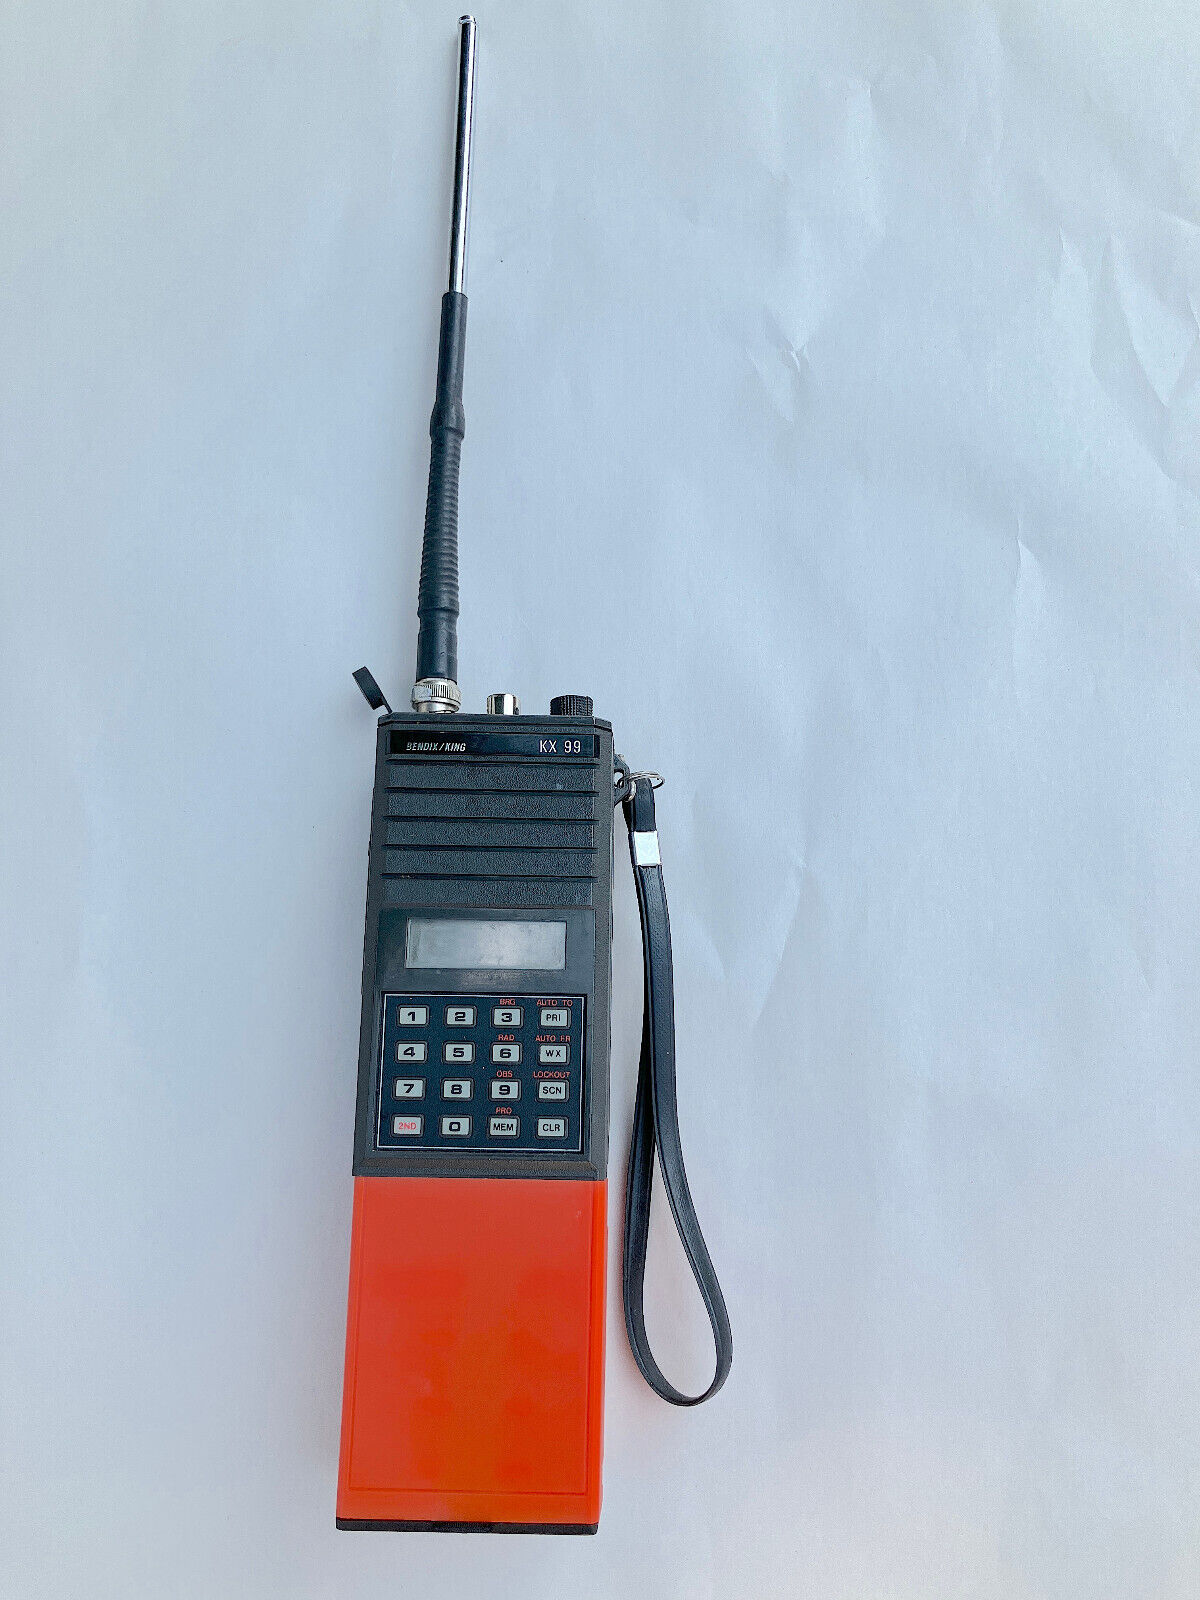 Bendix King KX99 Handheld Aviation Band Nav/Com Radio, Works